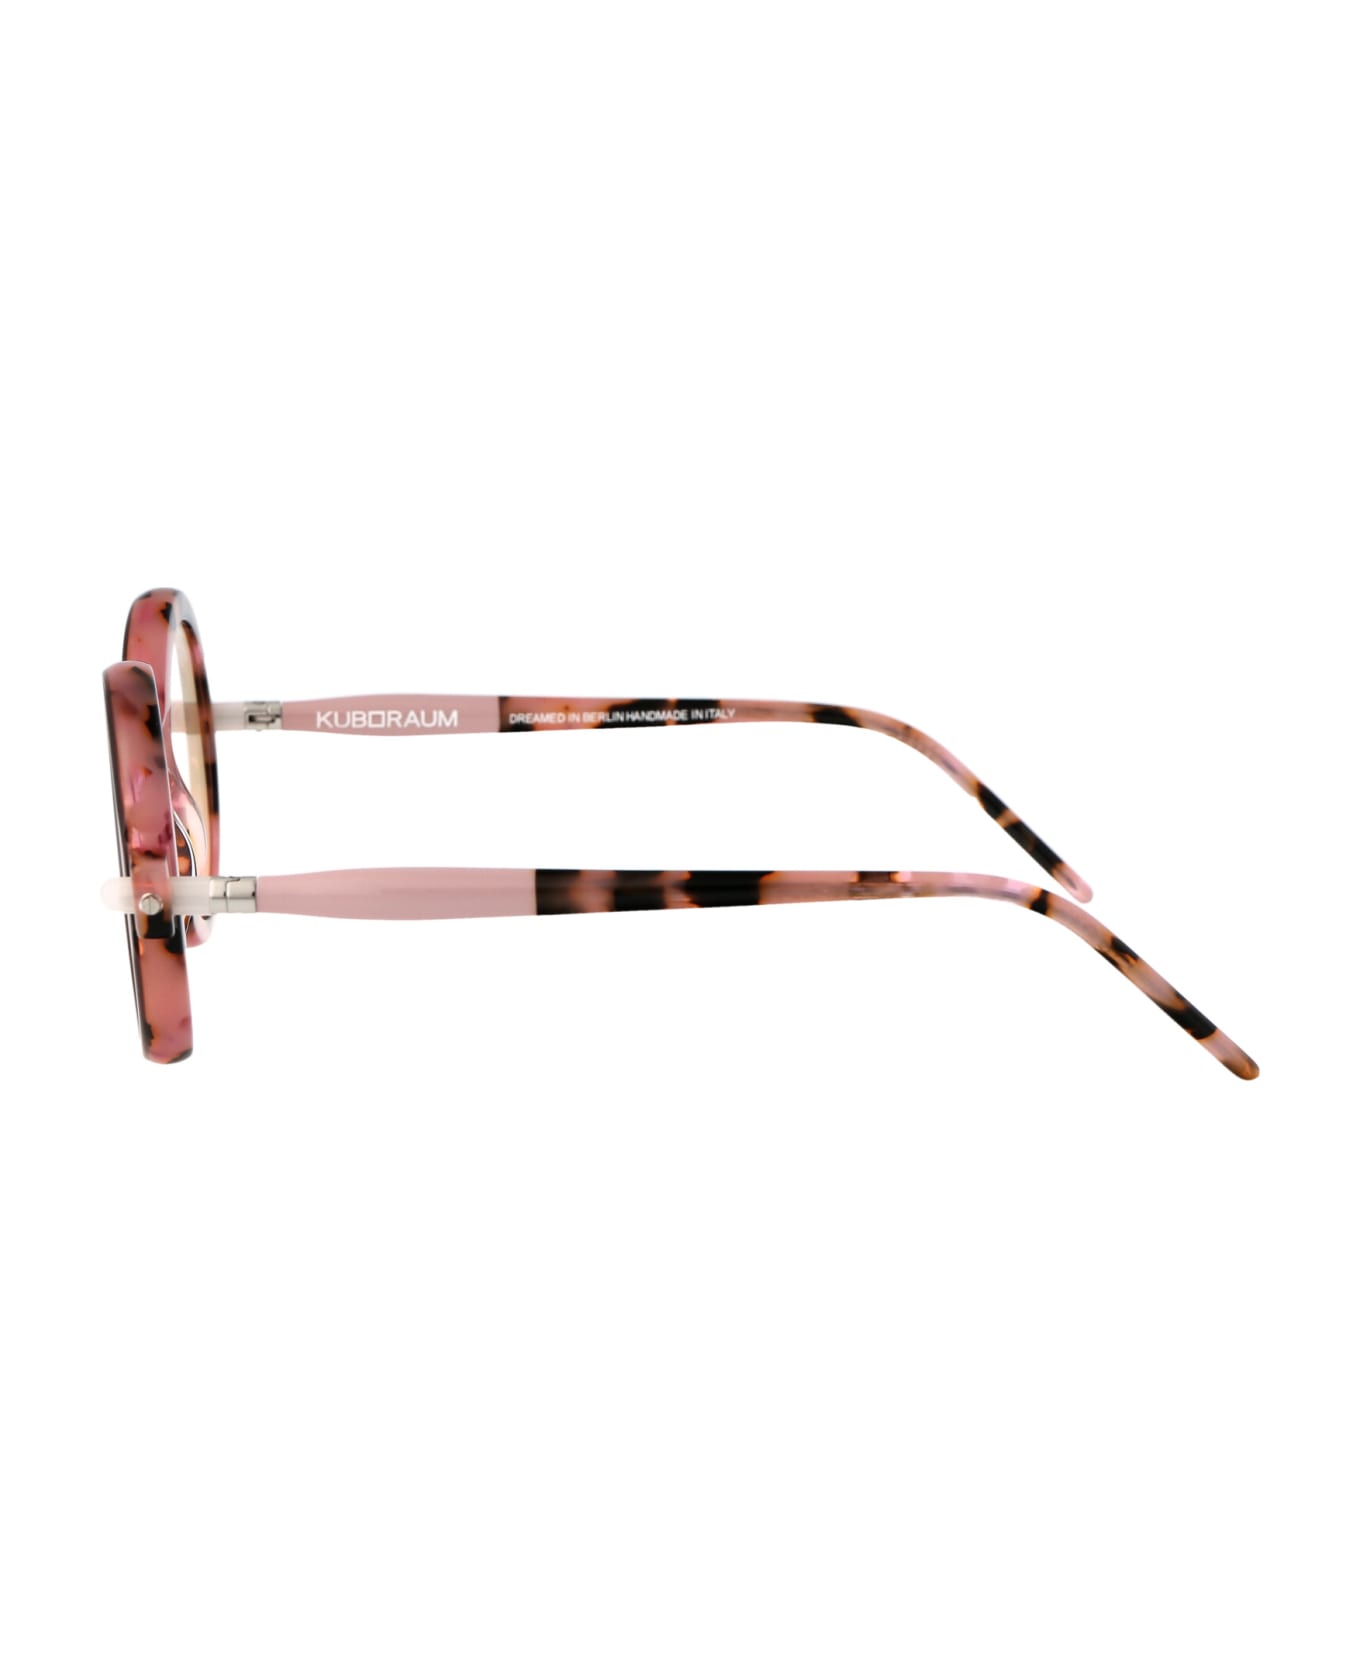 Kuboraum Maske P1 Sunglasses - HP pink1* サングラス